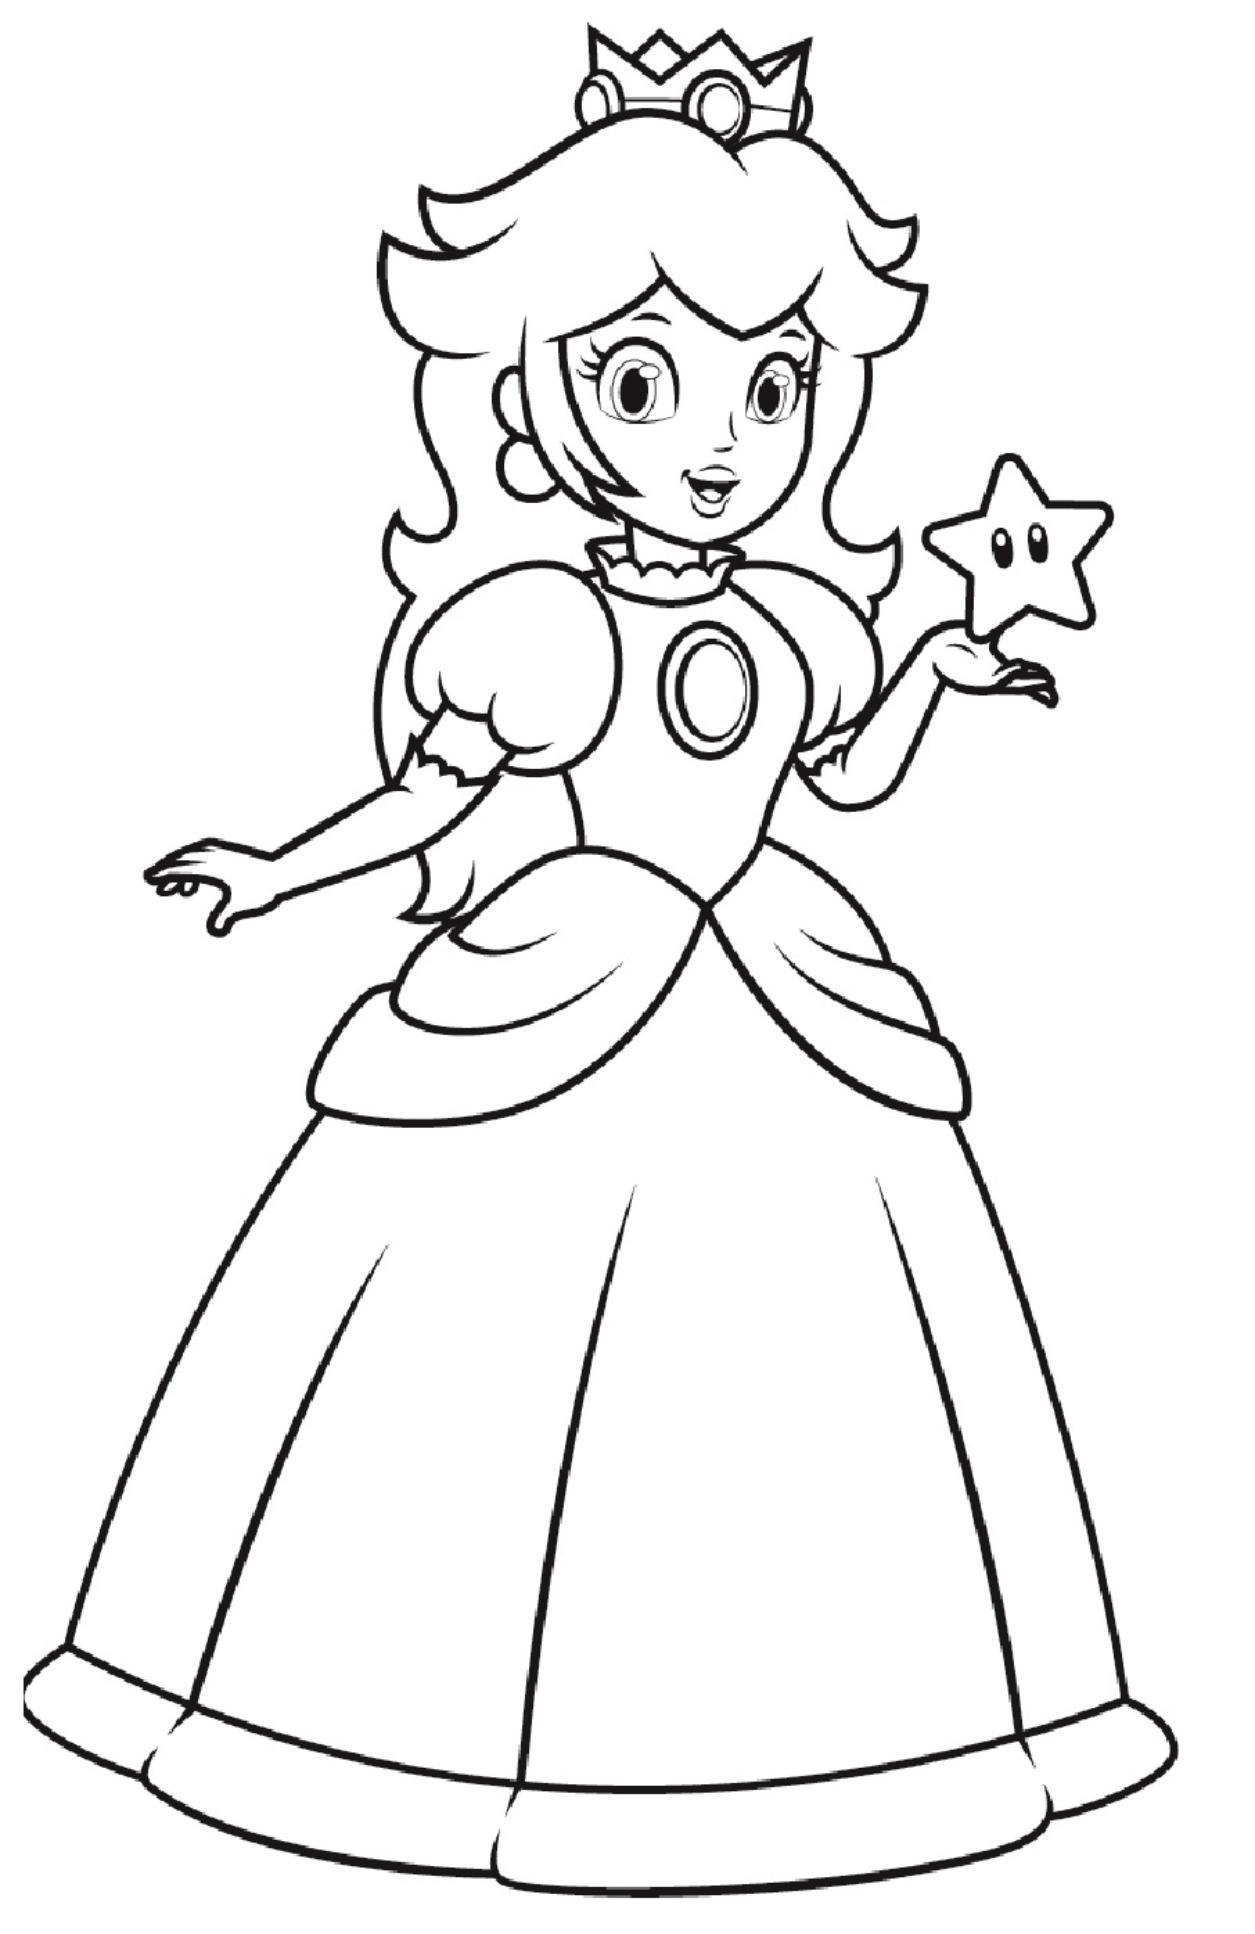 Princess Peach Coloring pages (Super Mario s Lover) ColoringLive com